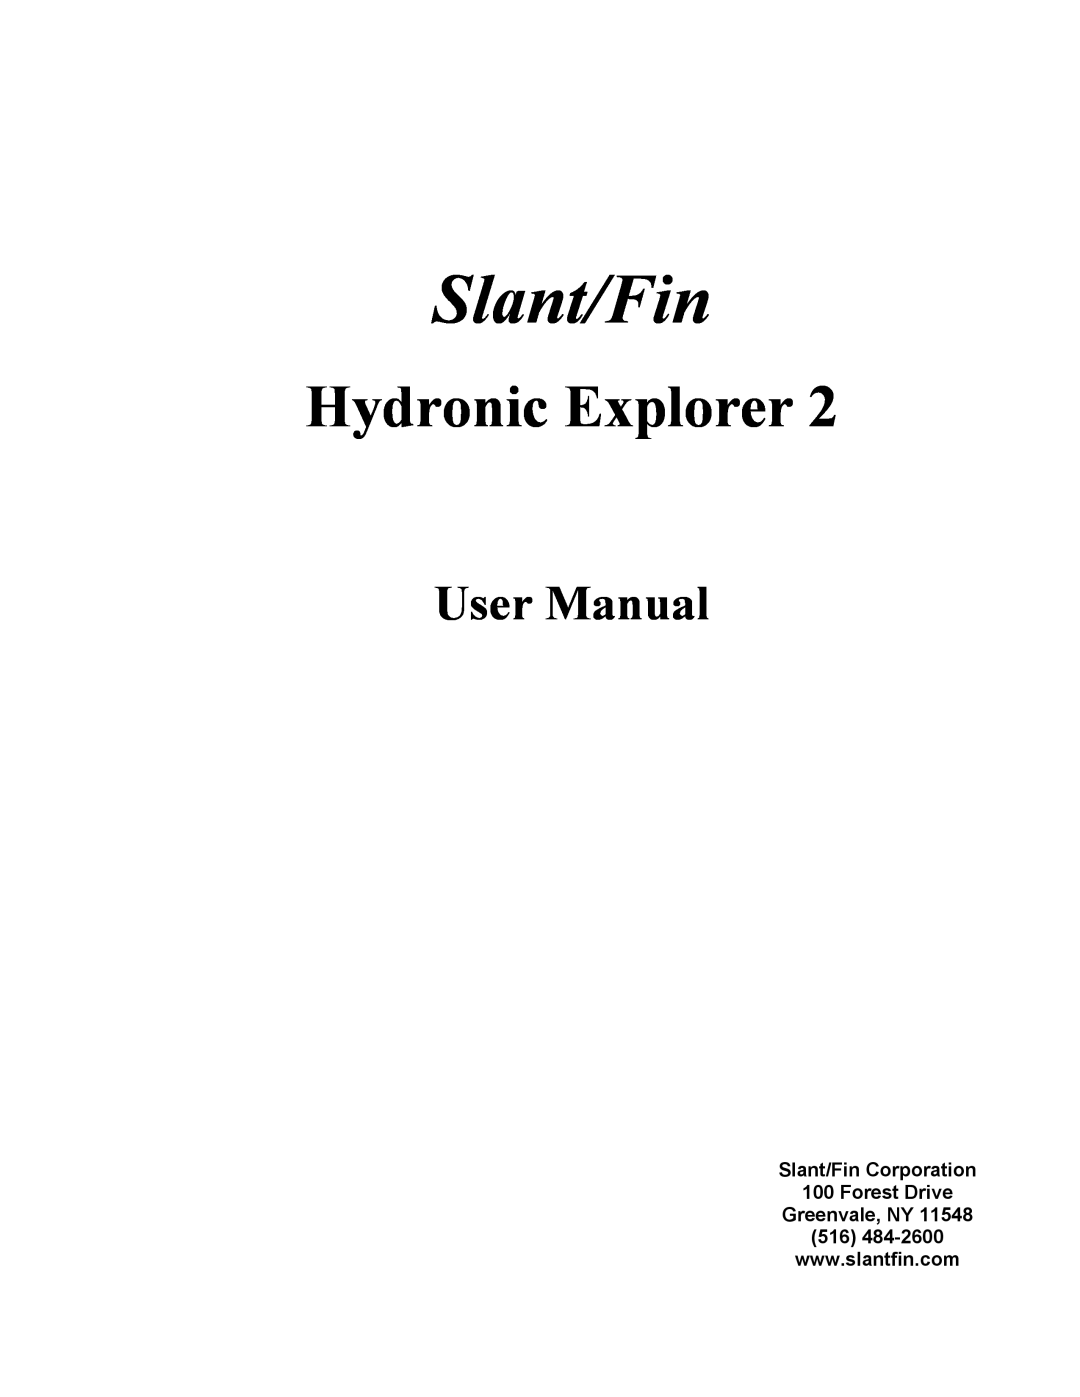 Slant/Fin Hydronic Explorer 2 user manual Slant/Fin Corporation 100 Forest Drive 